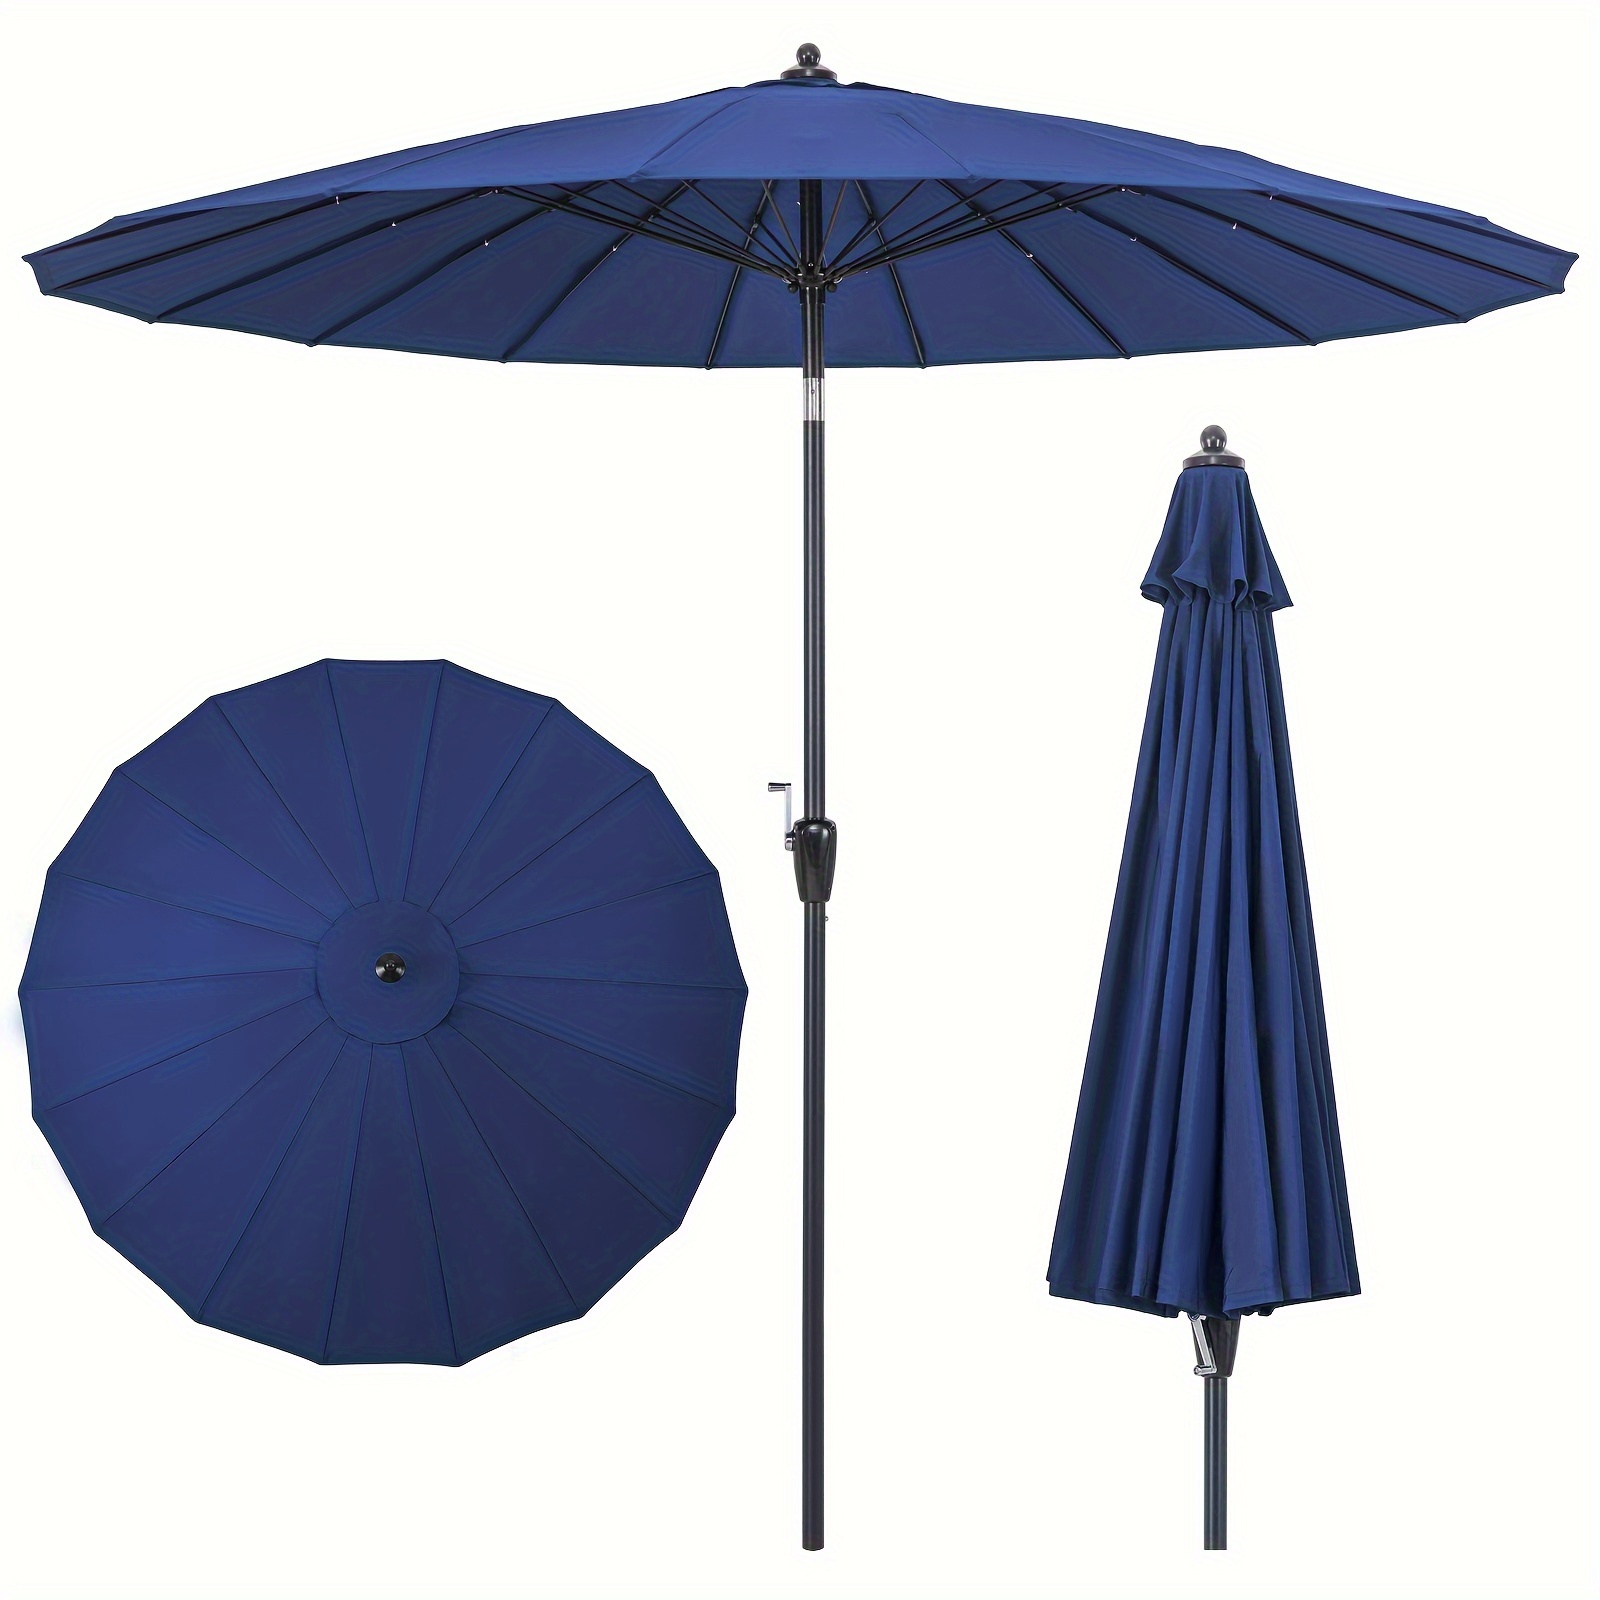 

Costway 9 Ft Patio Round Market Umbrella W/ Push Button Tilt, Crank Handle, Vented Top